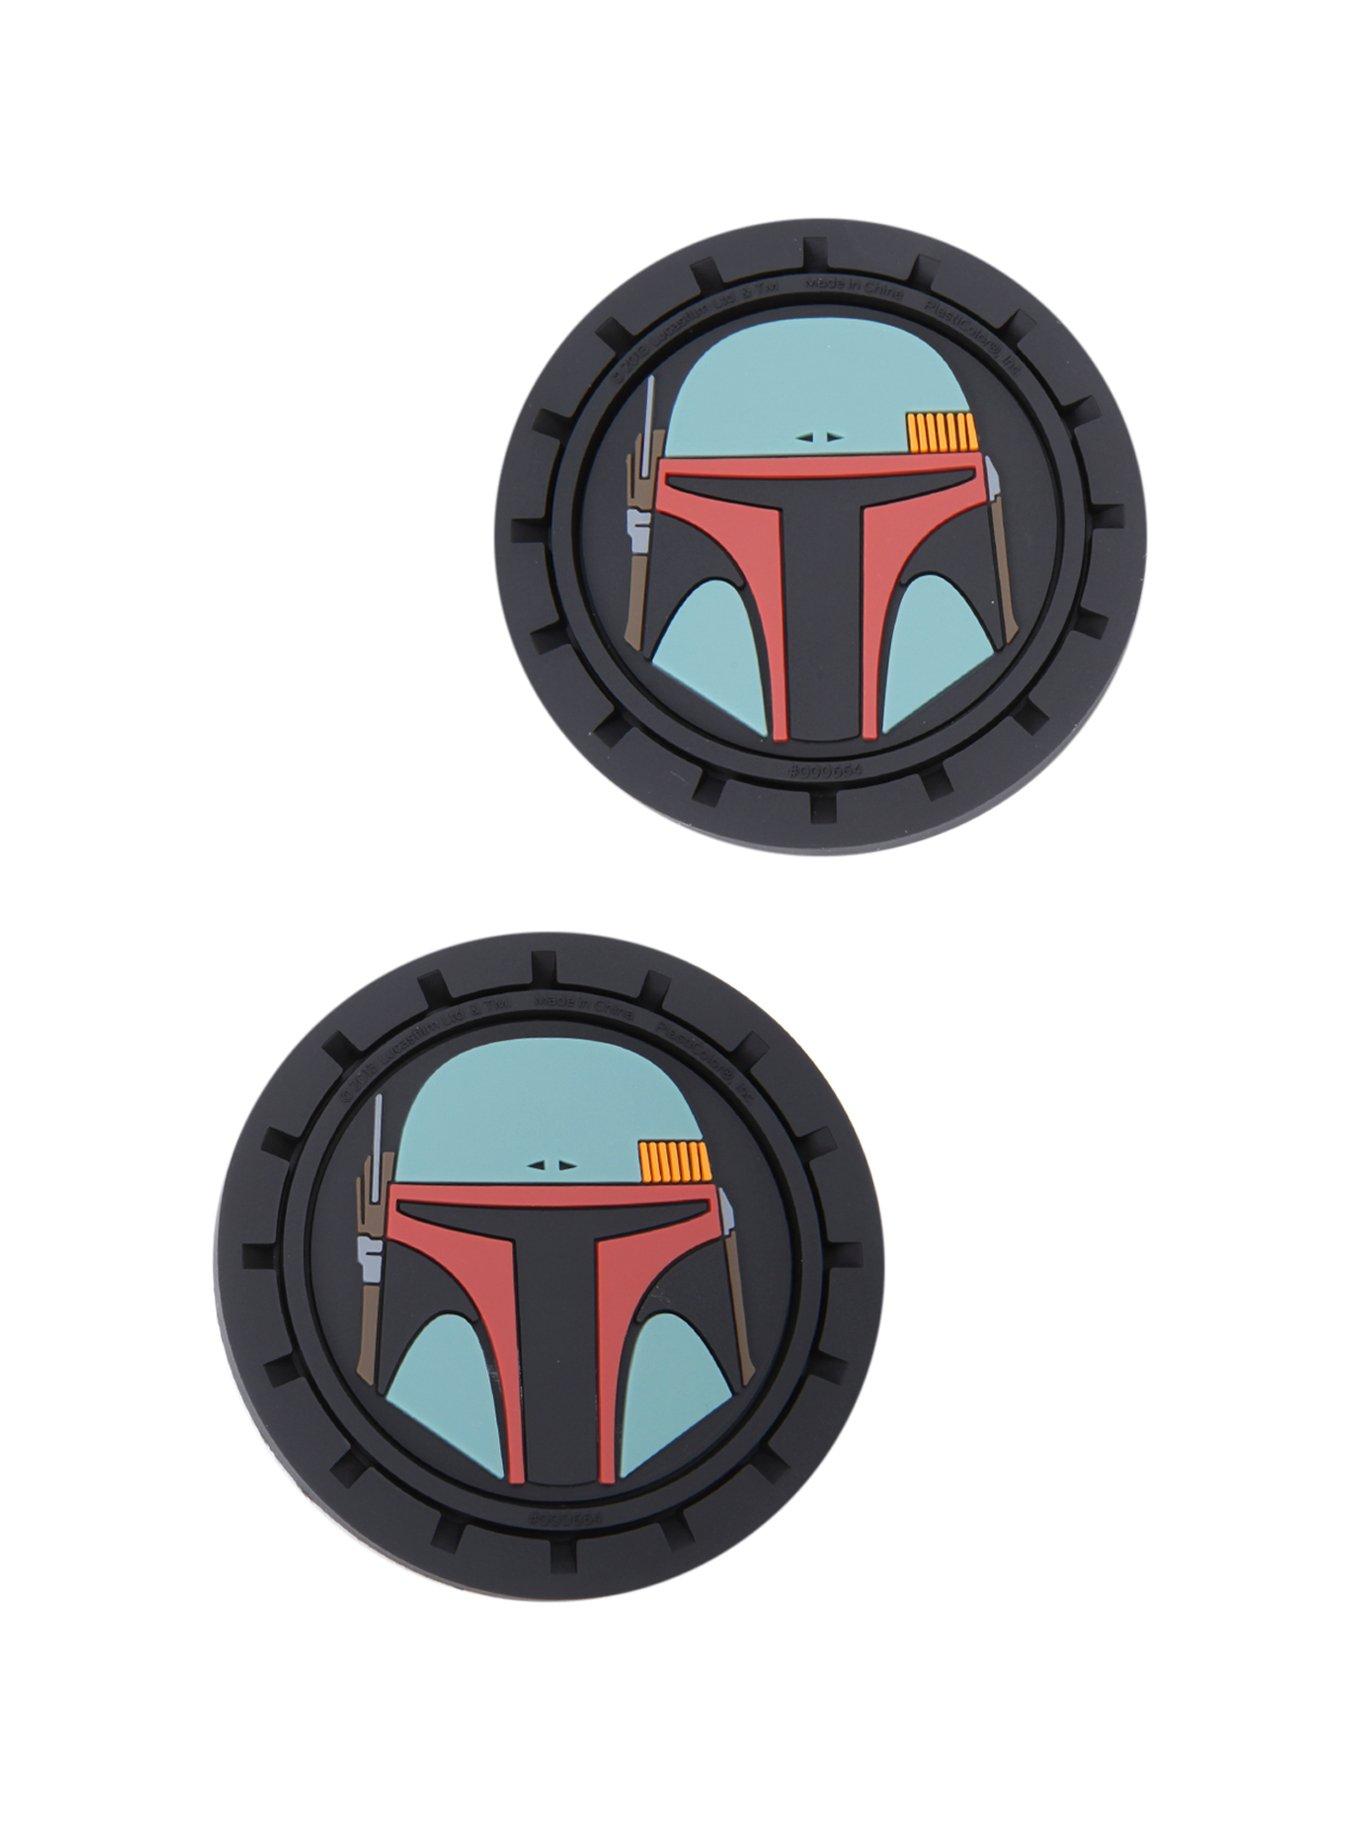 Star Wars Boba Fett Cup Holder Coasters: Star Wars Boba Fett Car